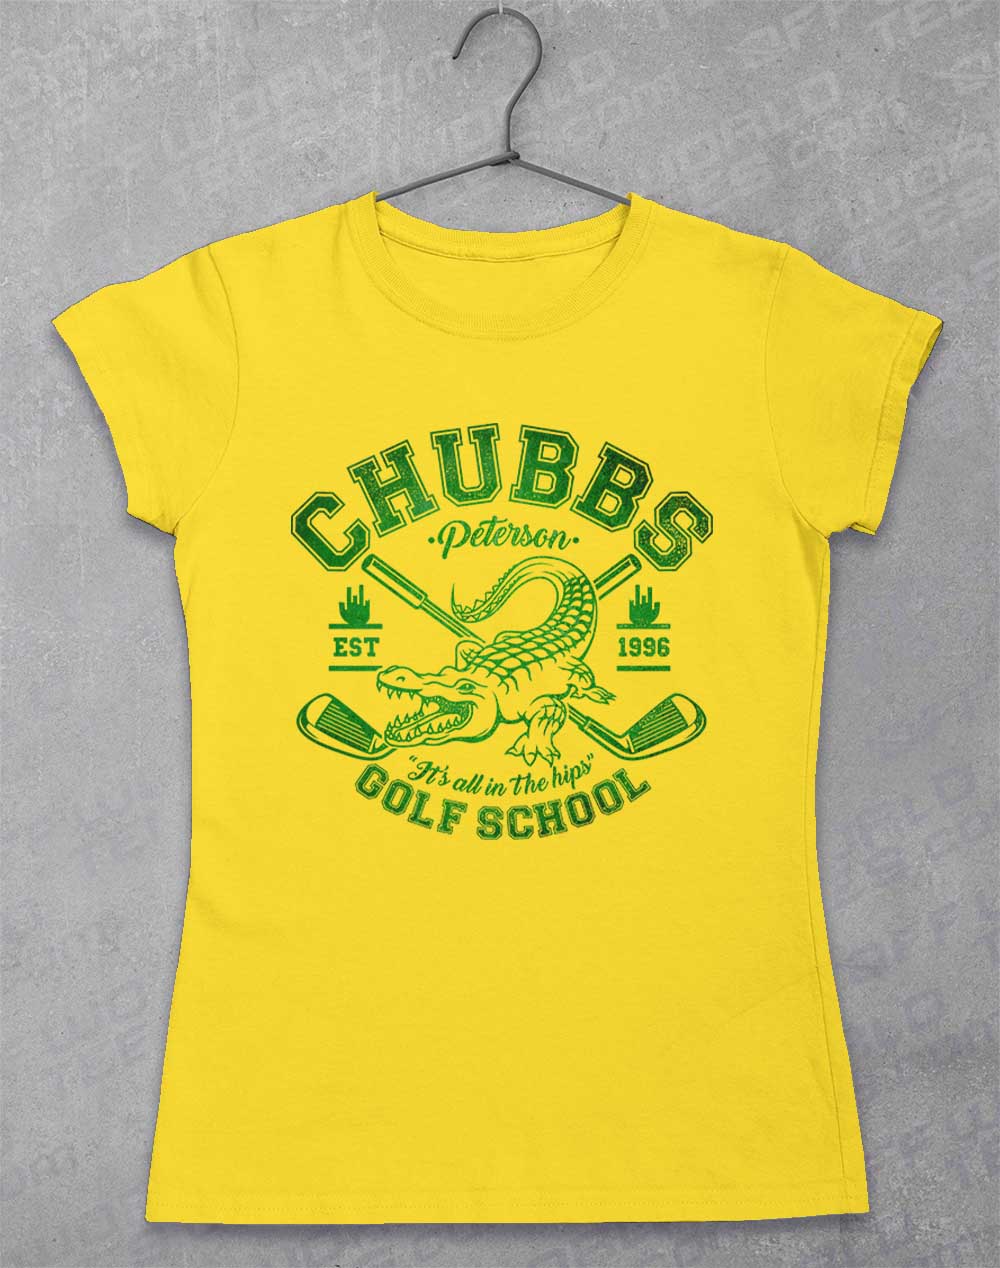 Daisy - Chubb's Golf School 1996 Women's T-Shirt